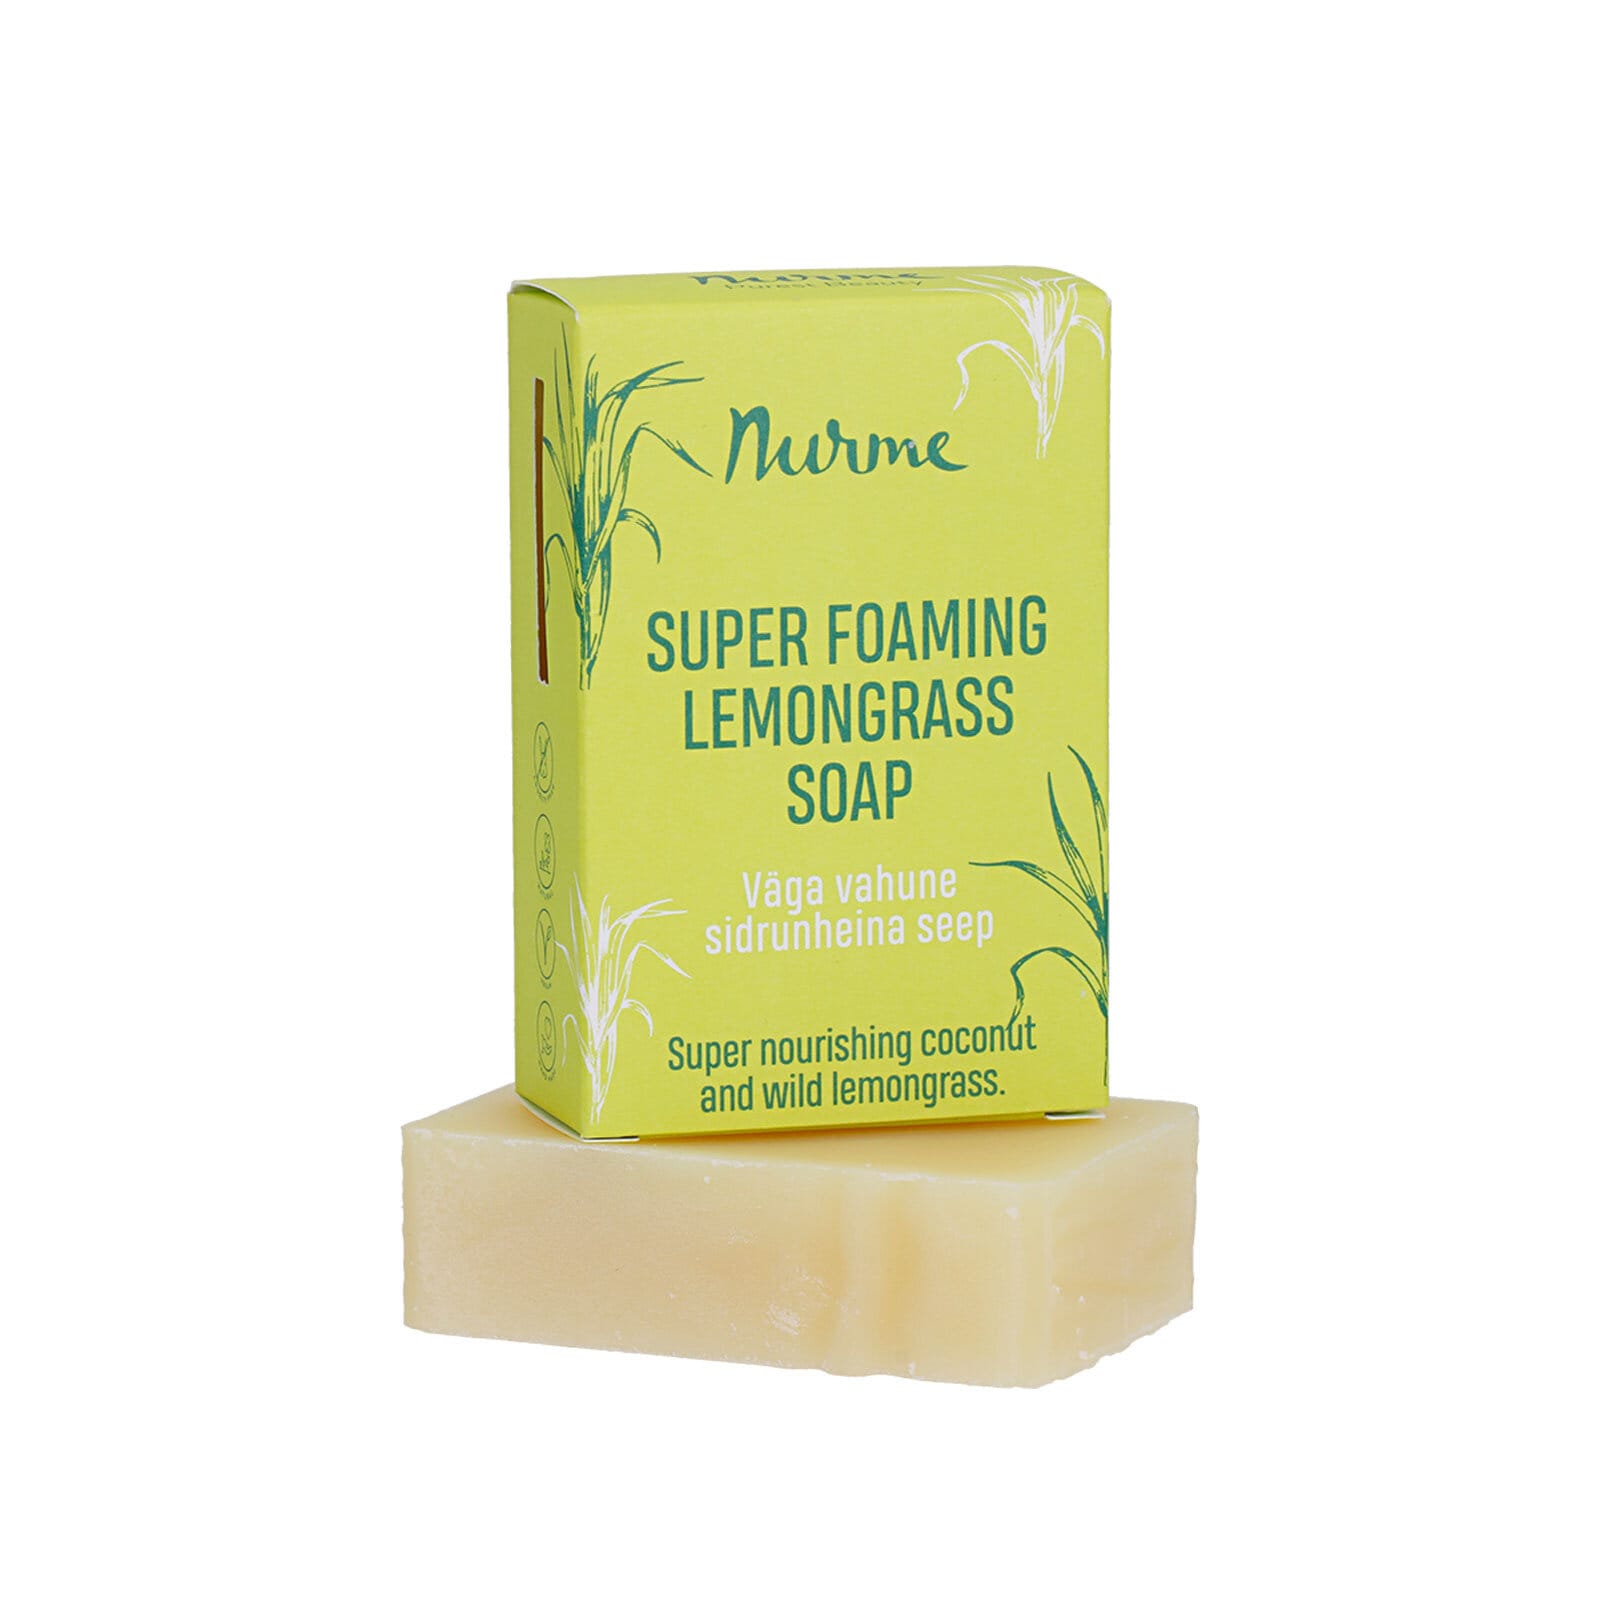 Nurme Super Foaming Lemongrass Soap